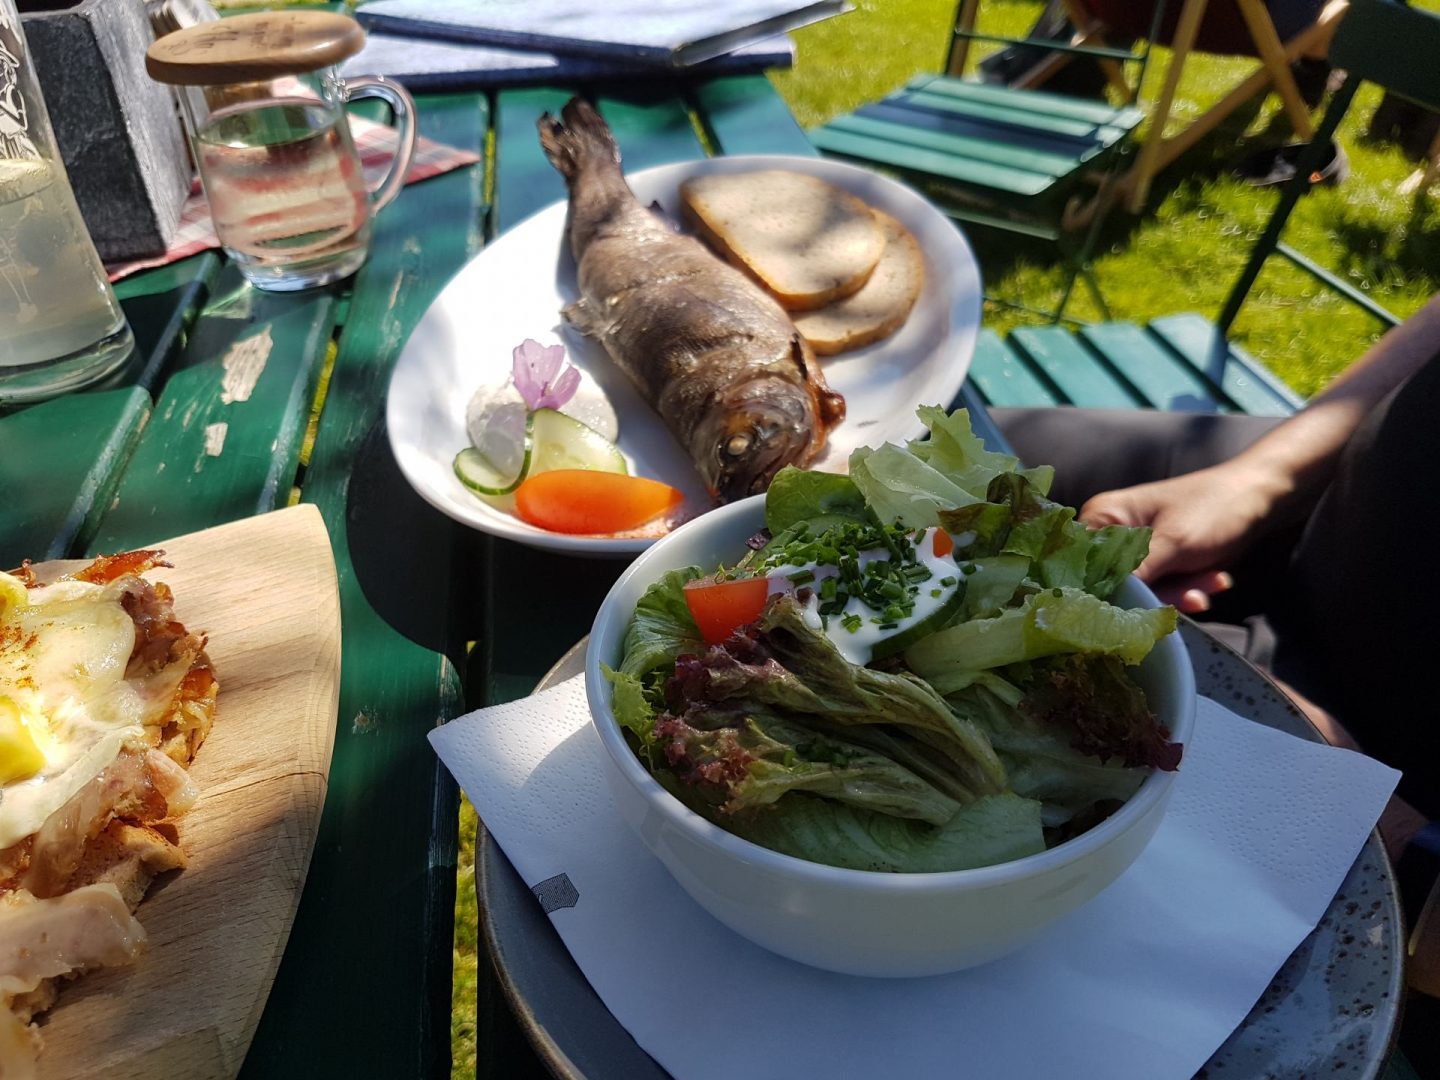 Erfahrung Bewertung Kritik Jausenstation Grünegg frisch geräucherte Forelle mit Salat Foodblog Sternestulle